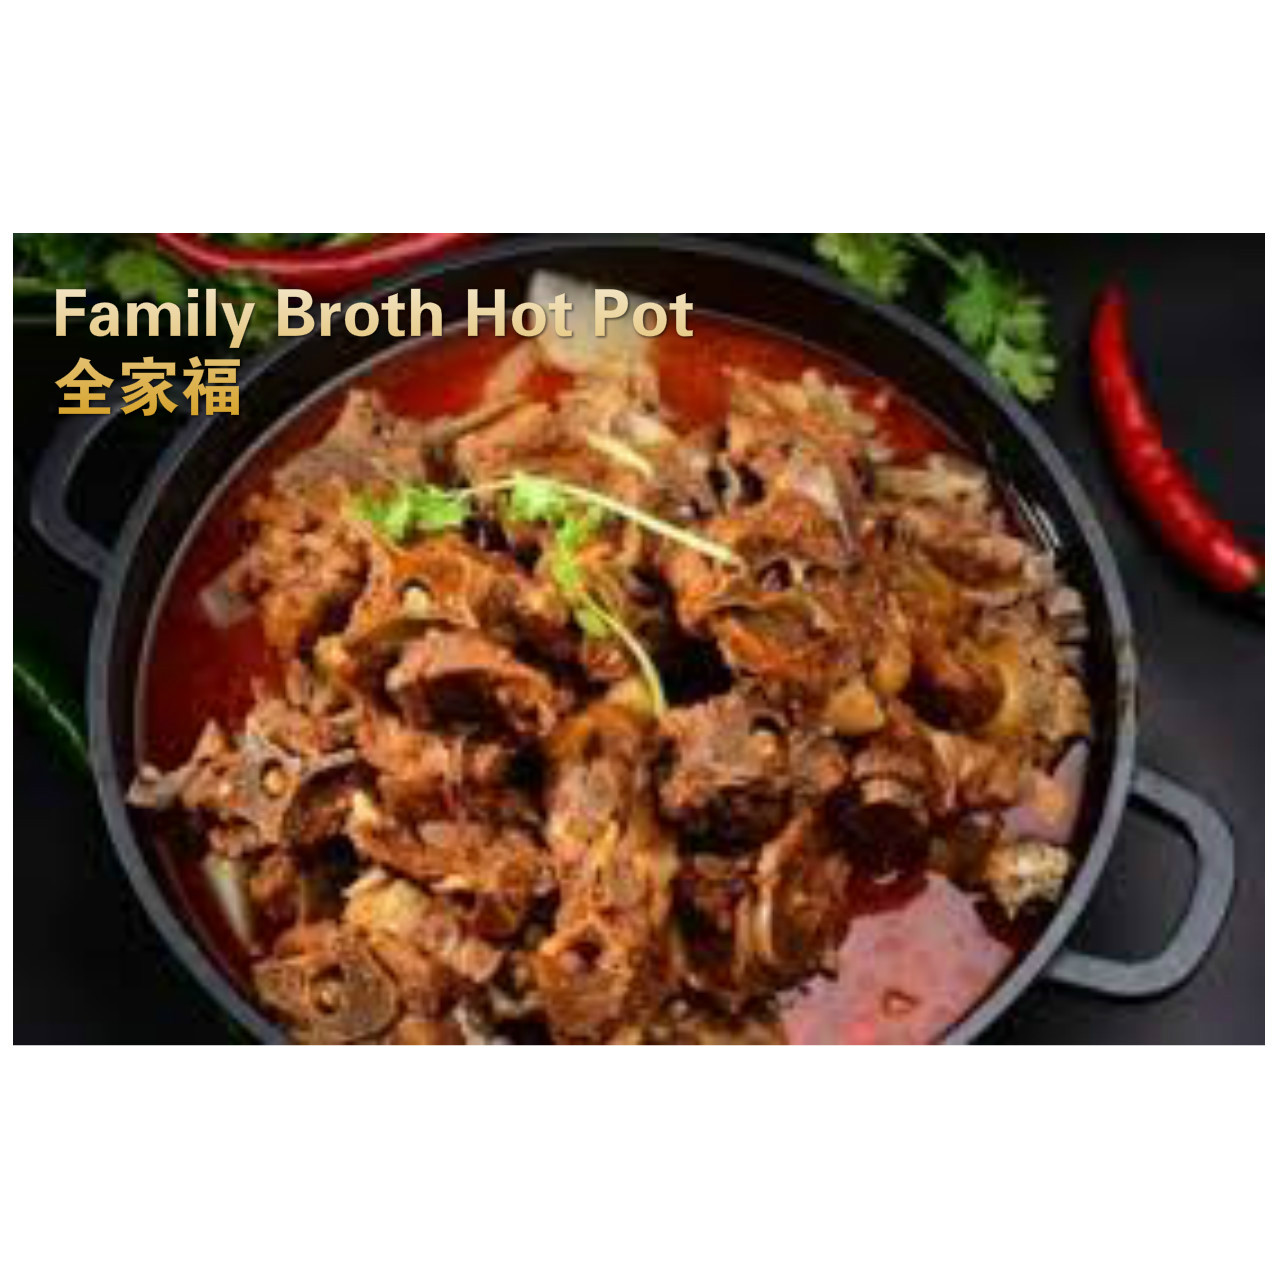 Family broth hot pot (premium lamb spine, lamb leg bones, lamb chop)